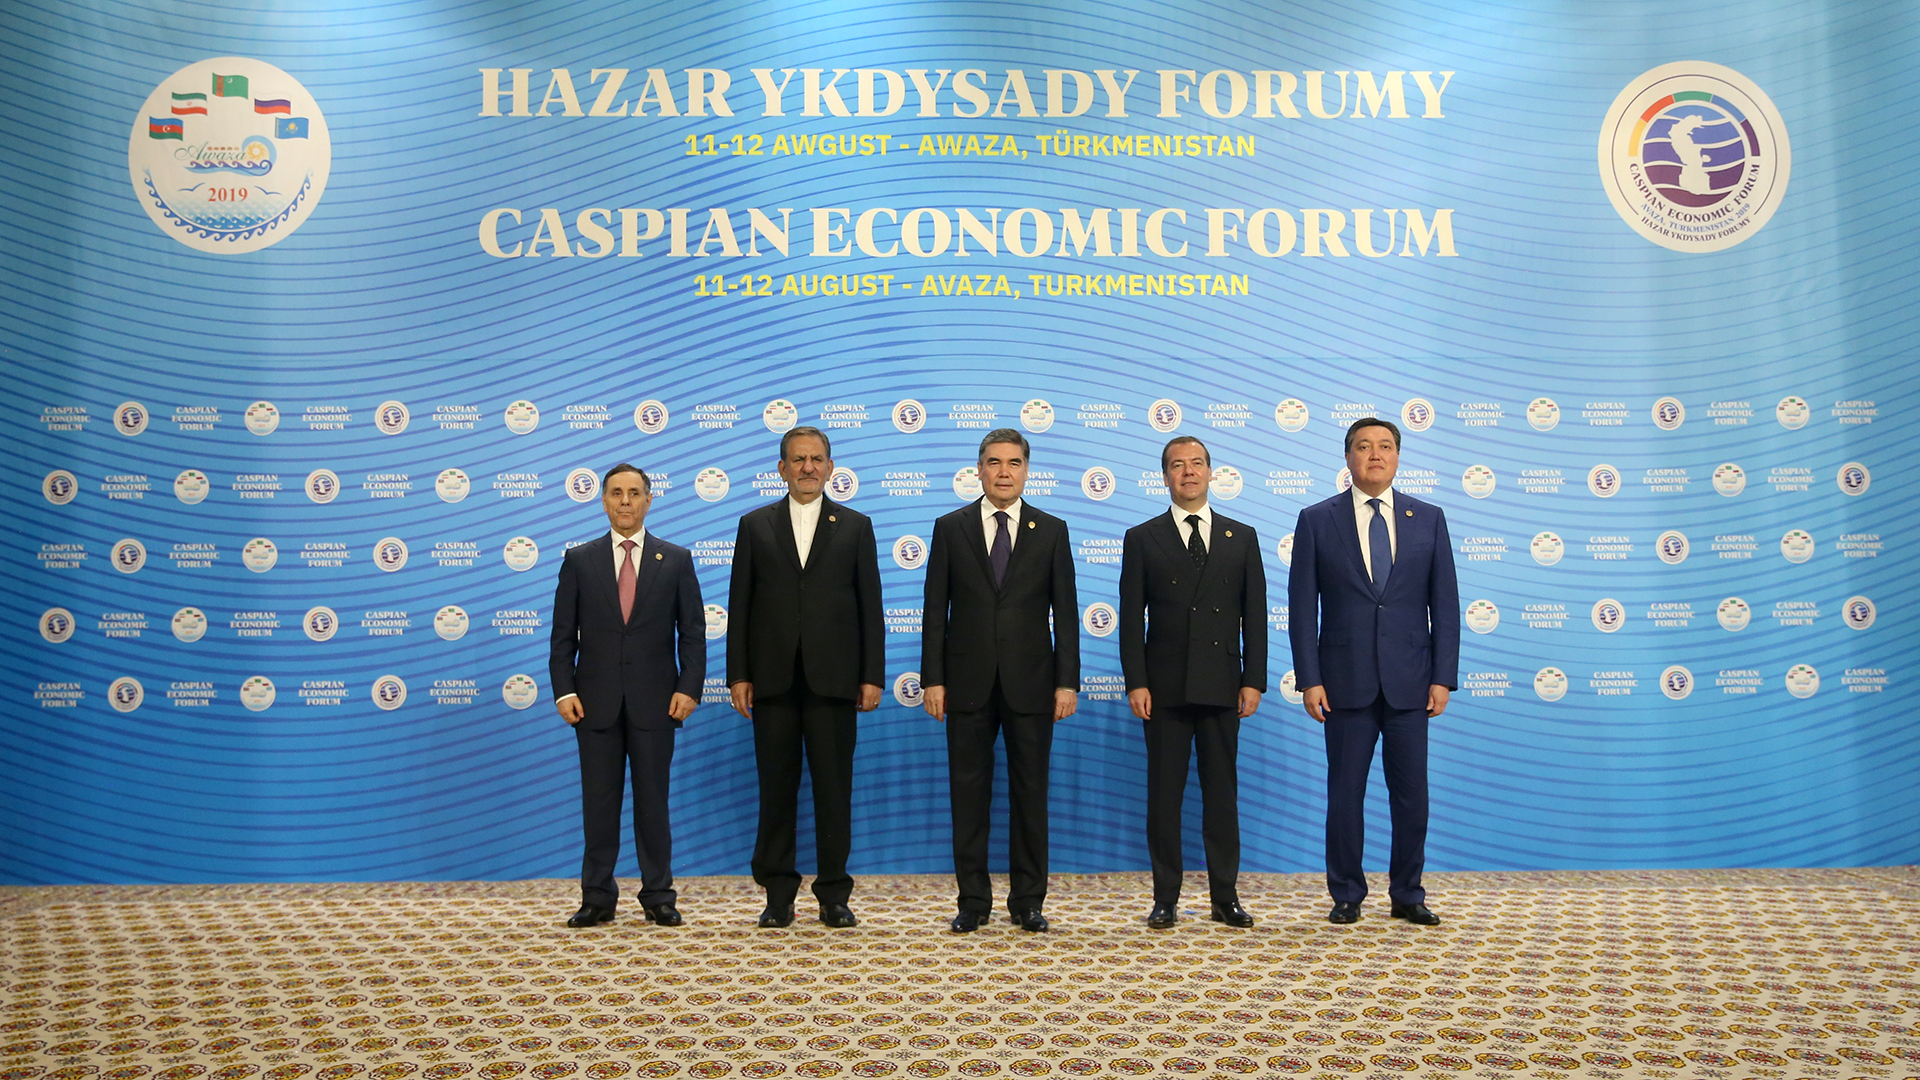 Askar Mamin participates in I Caspian Economic Forum in Turkmenistan